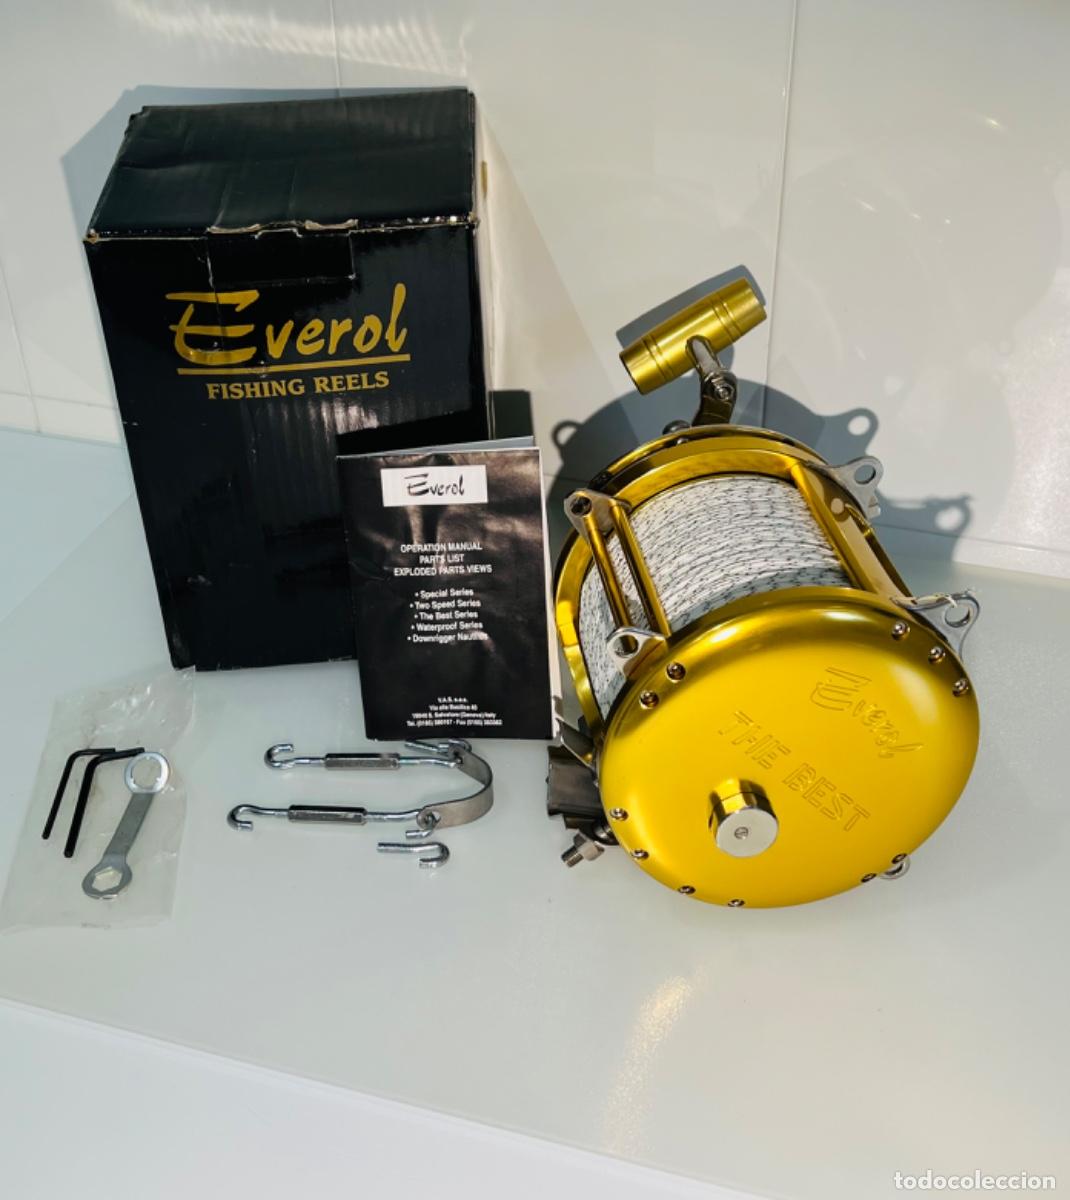 everol “the best” series 14/0. 130lbs. carrete - Comprar Material